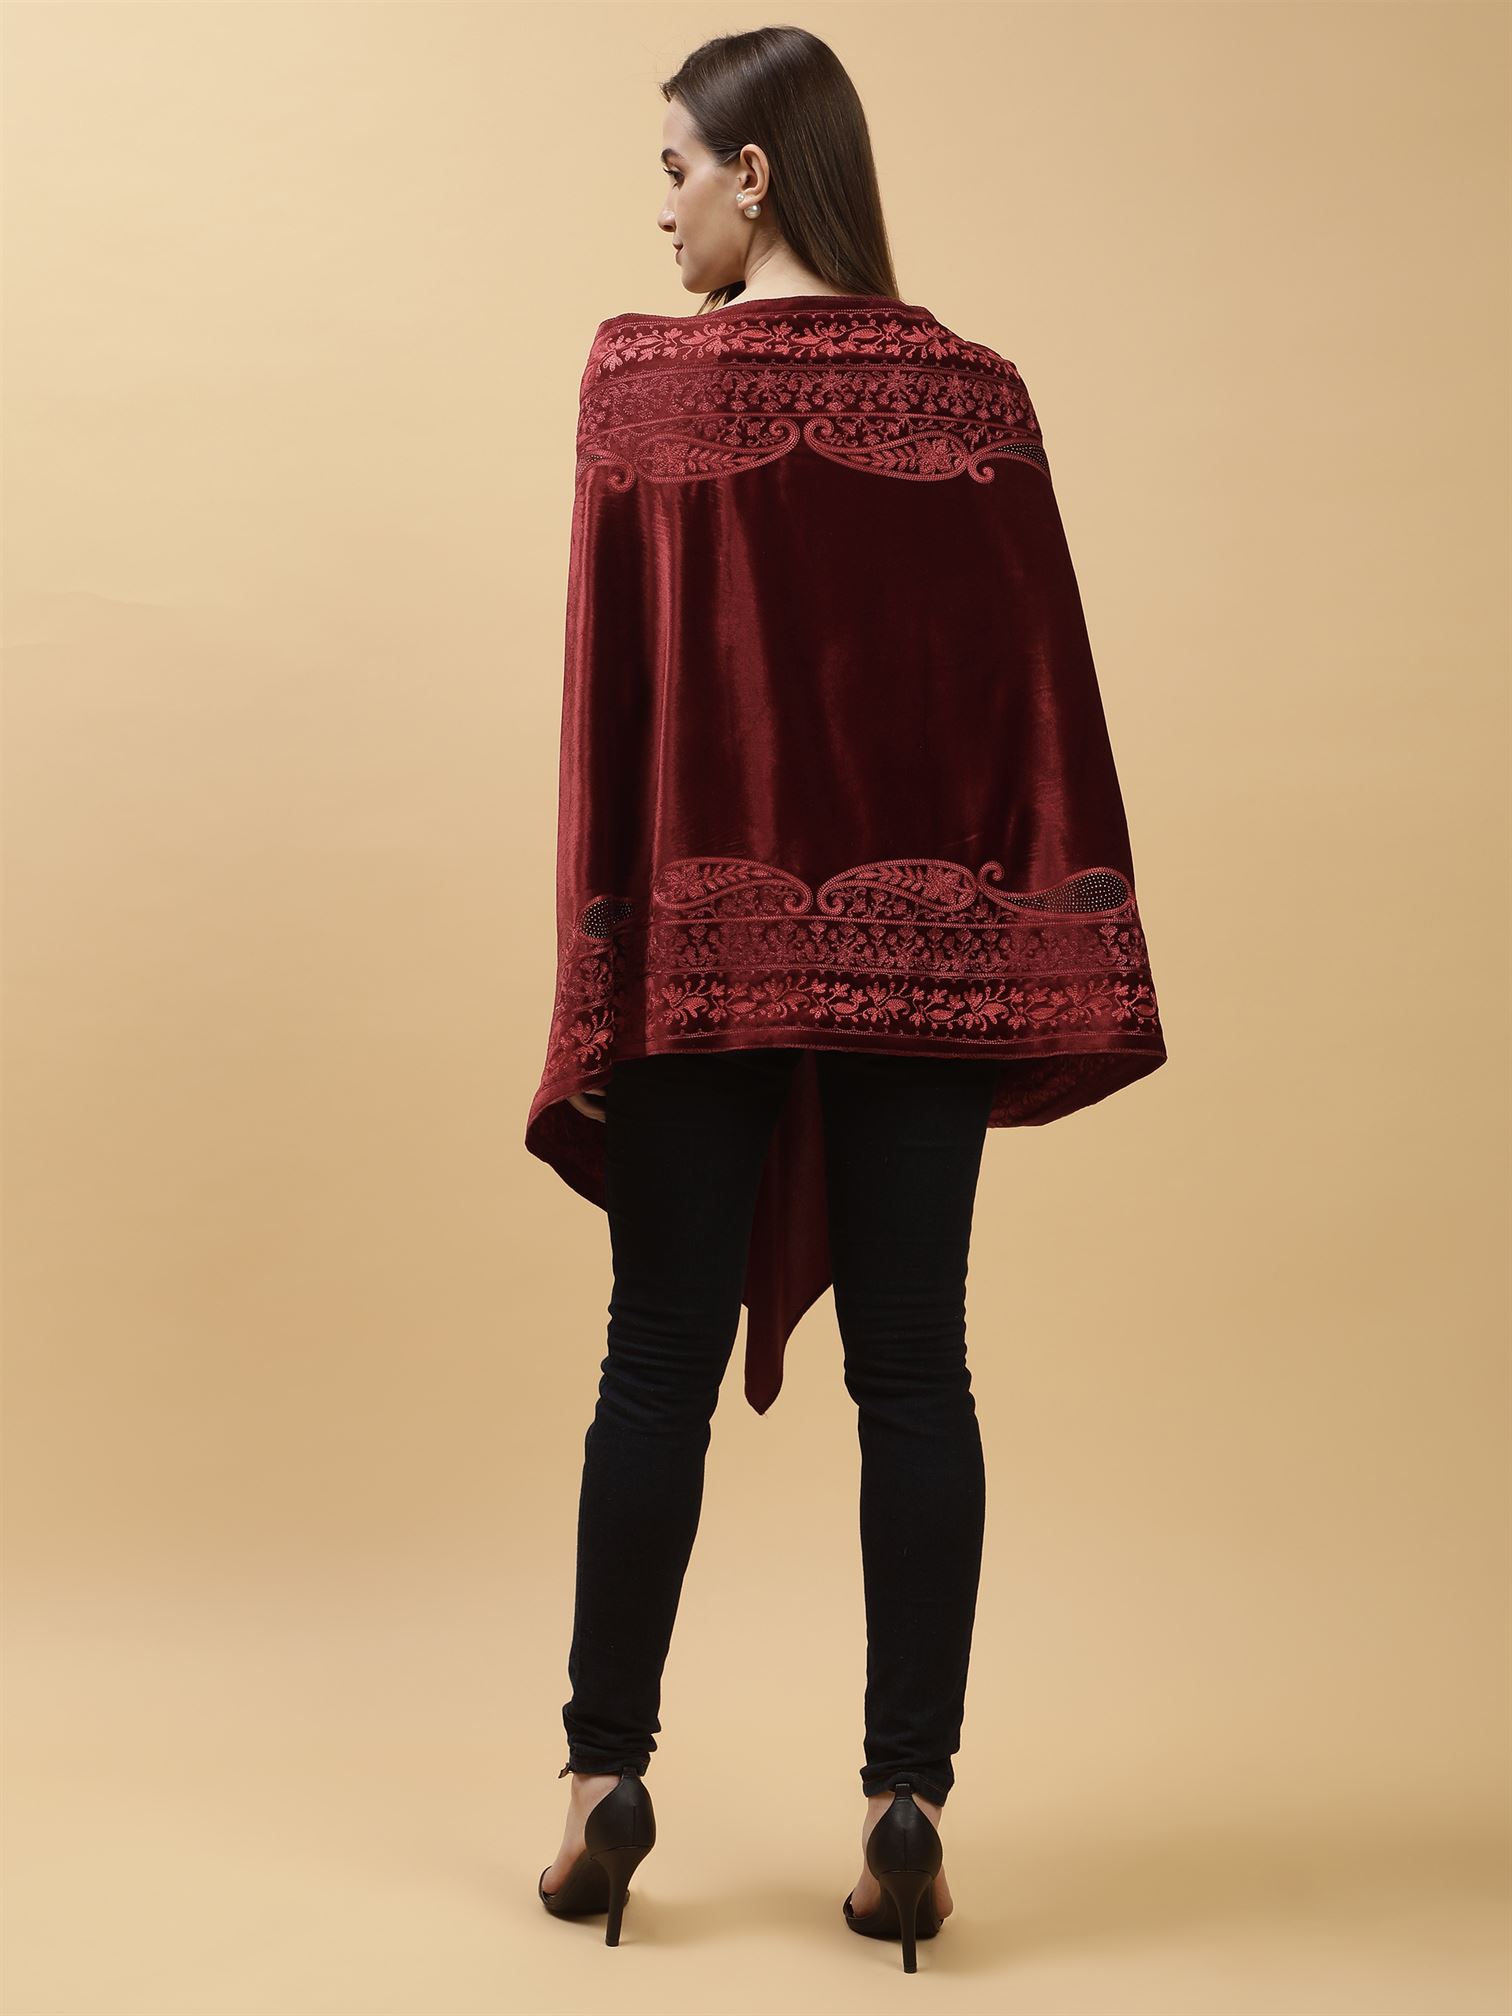 maroon-embroidered-velvet-shawl-mchsvd1645-moda-chales-5